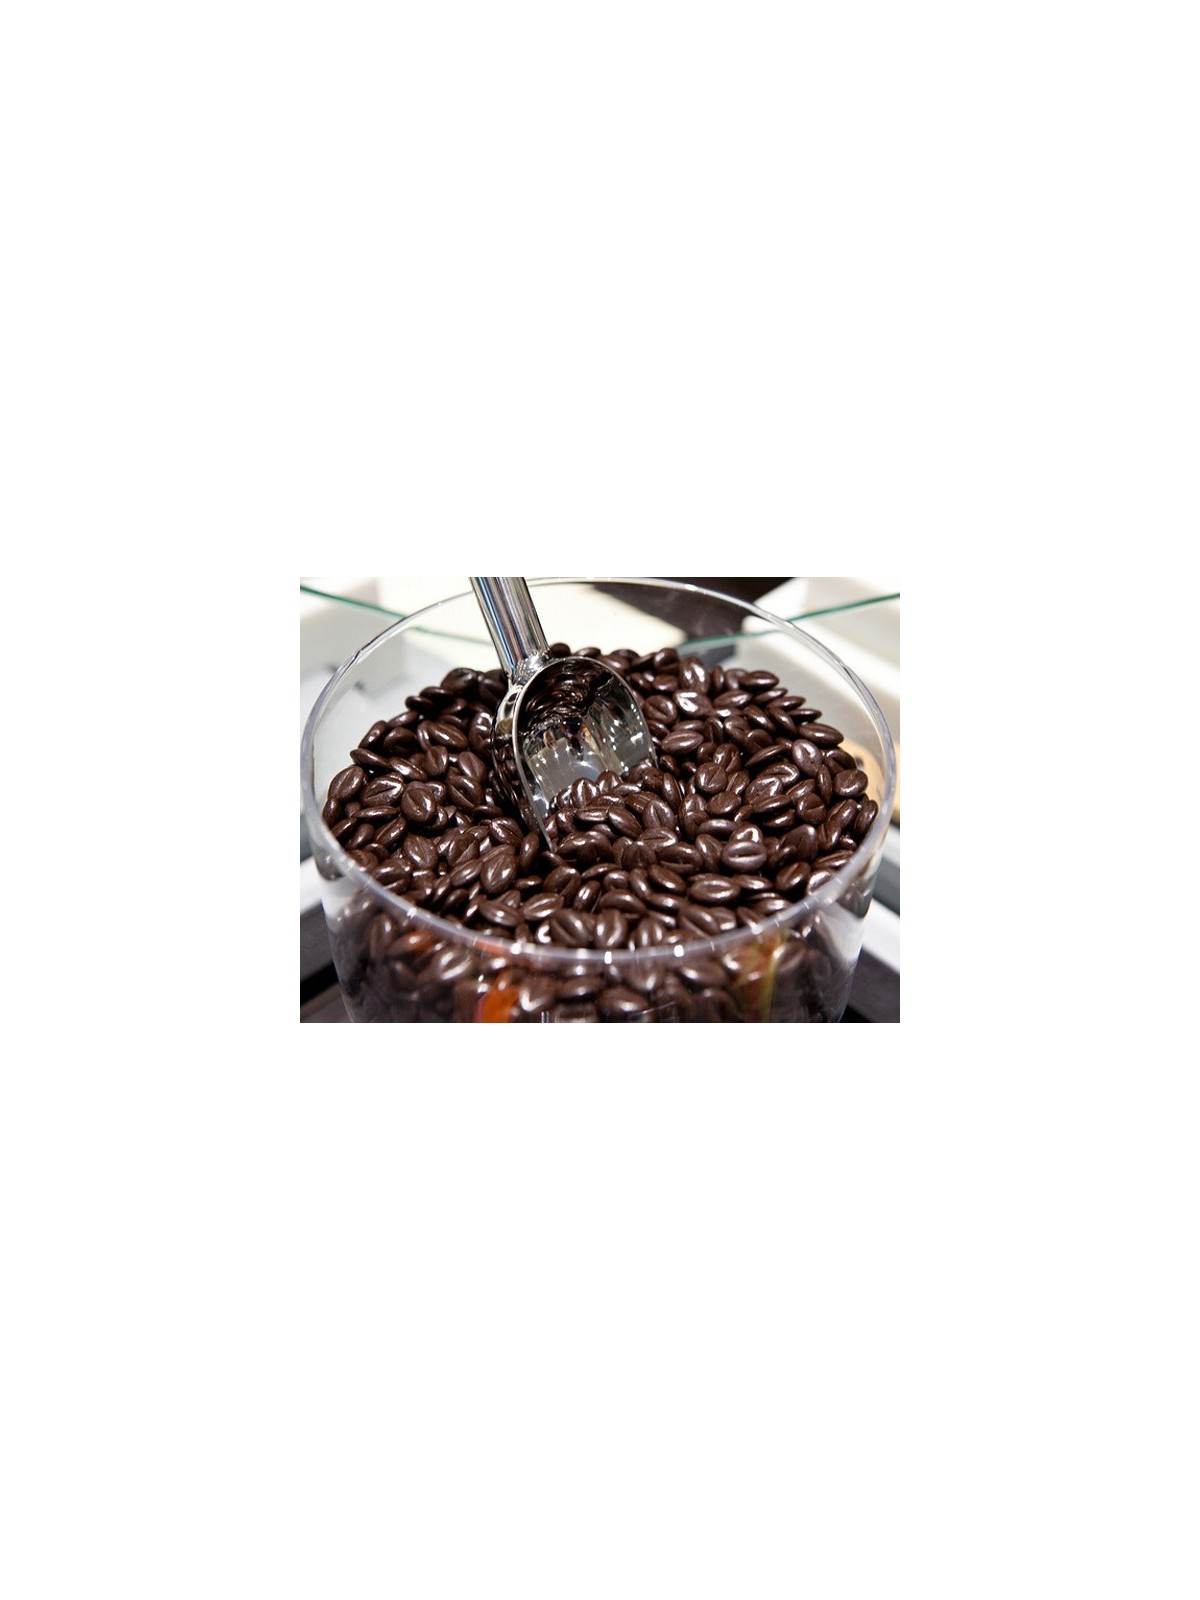 Čokoládové zdobenie - kávové zrná - 150g